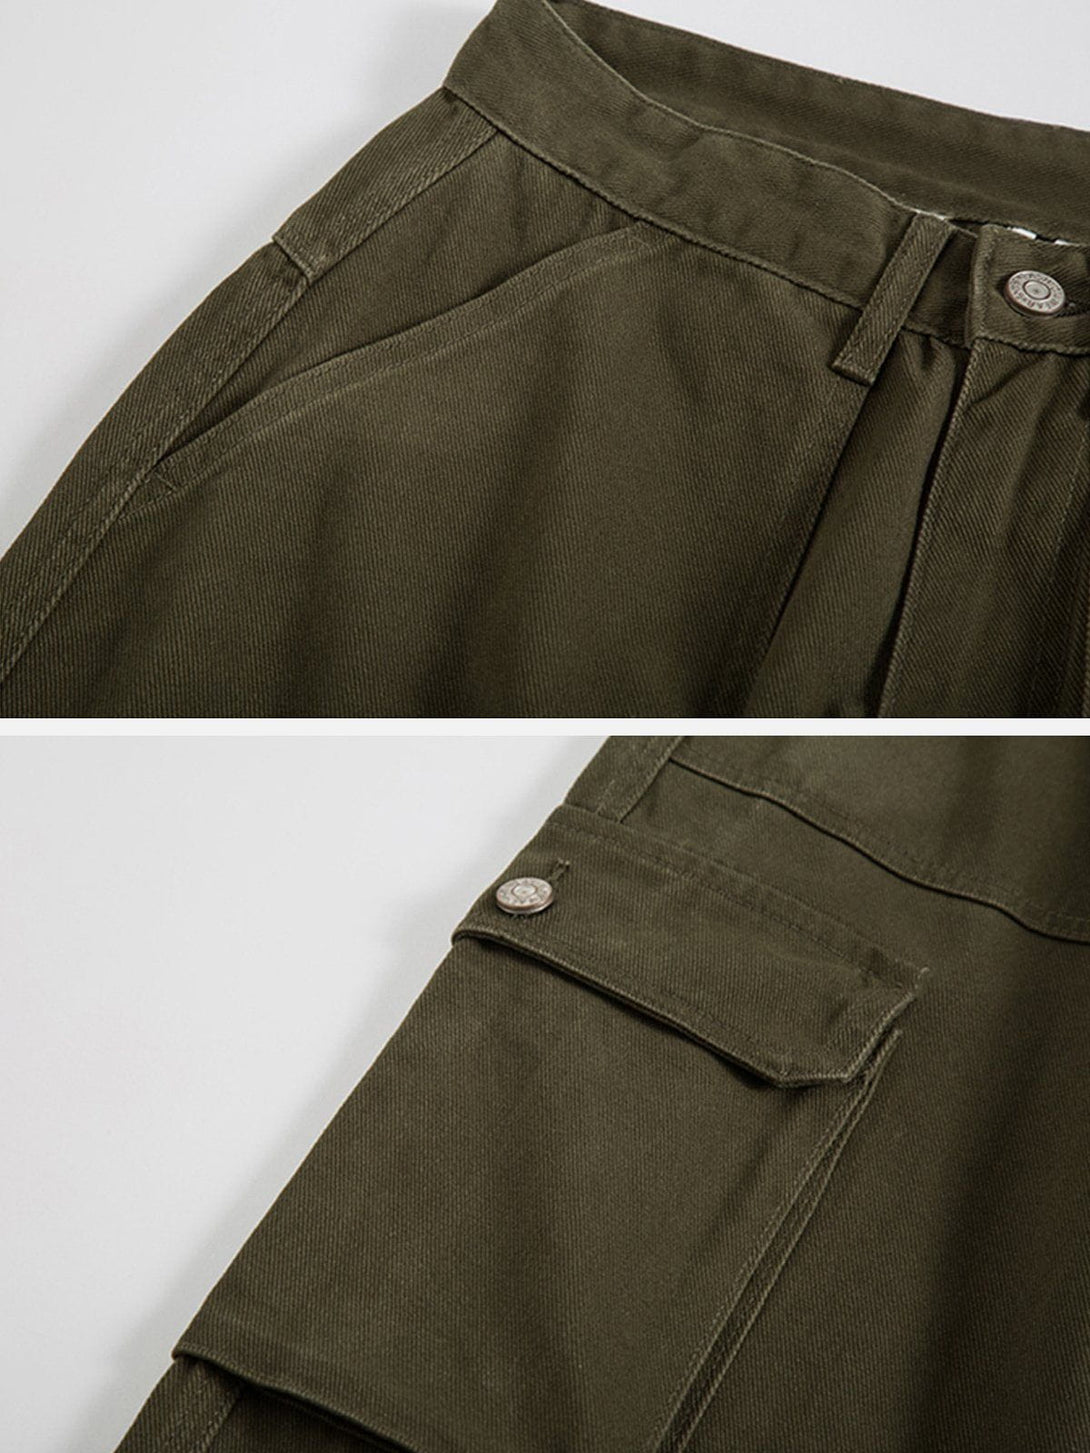 Majesda® - Tuckable Leg Cargo Pants outfit ideas streetwear fashion